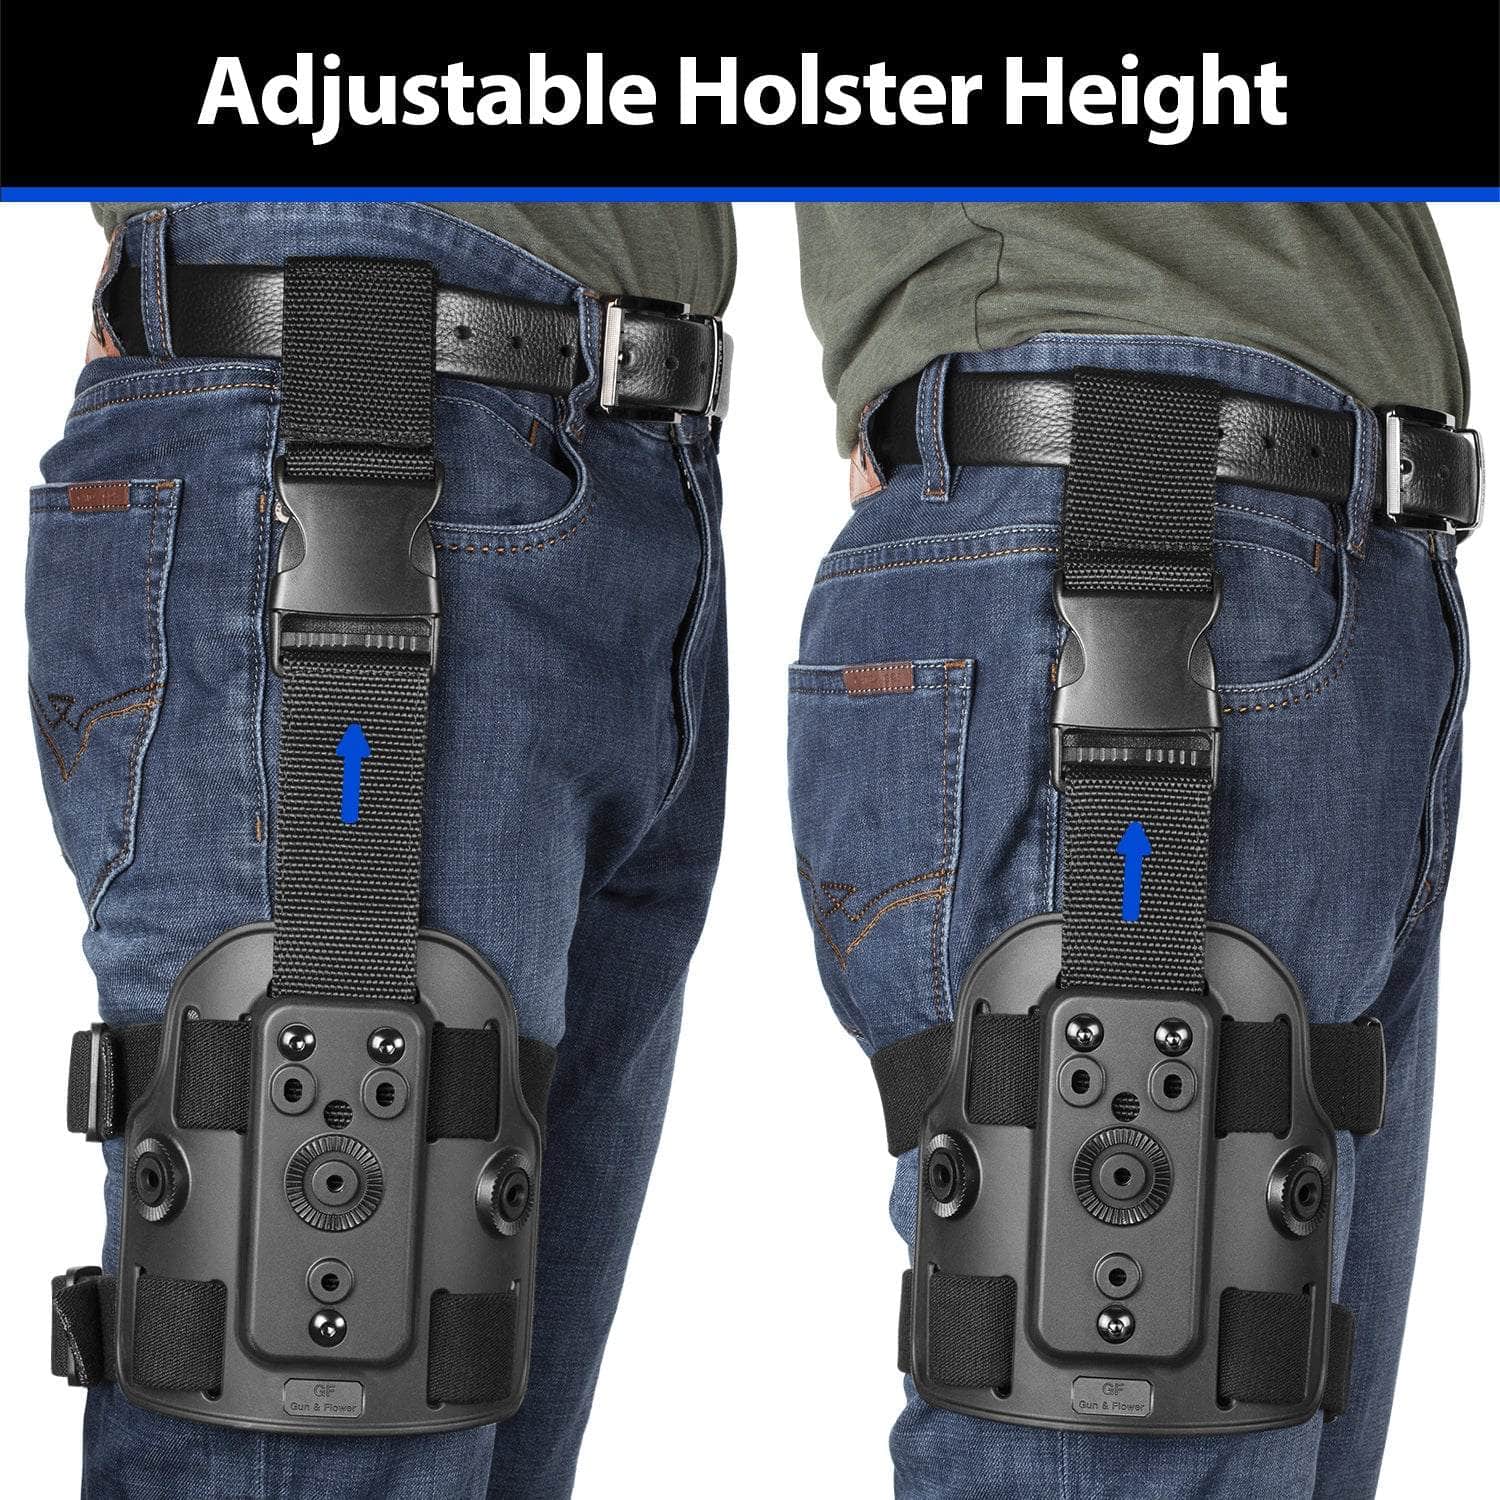 Drop Leg Platform Polymer Drop Leg Panel Attachments for Holsters